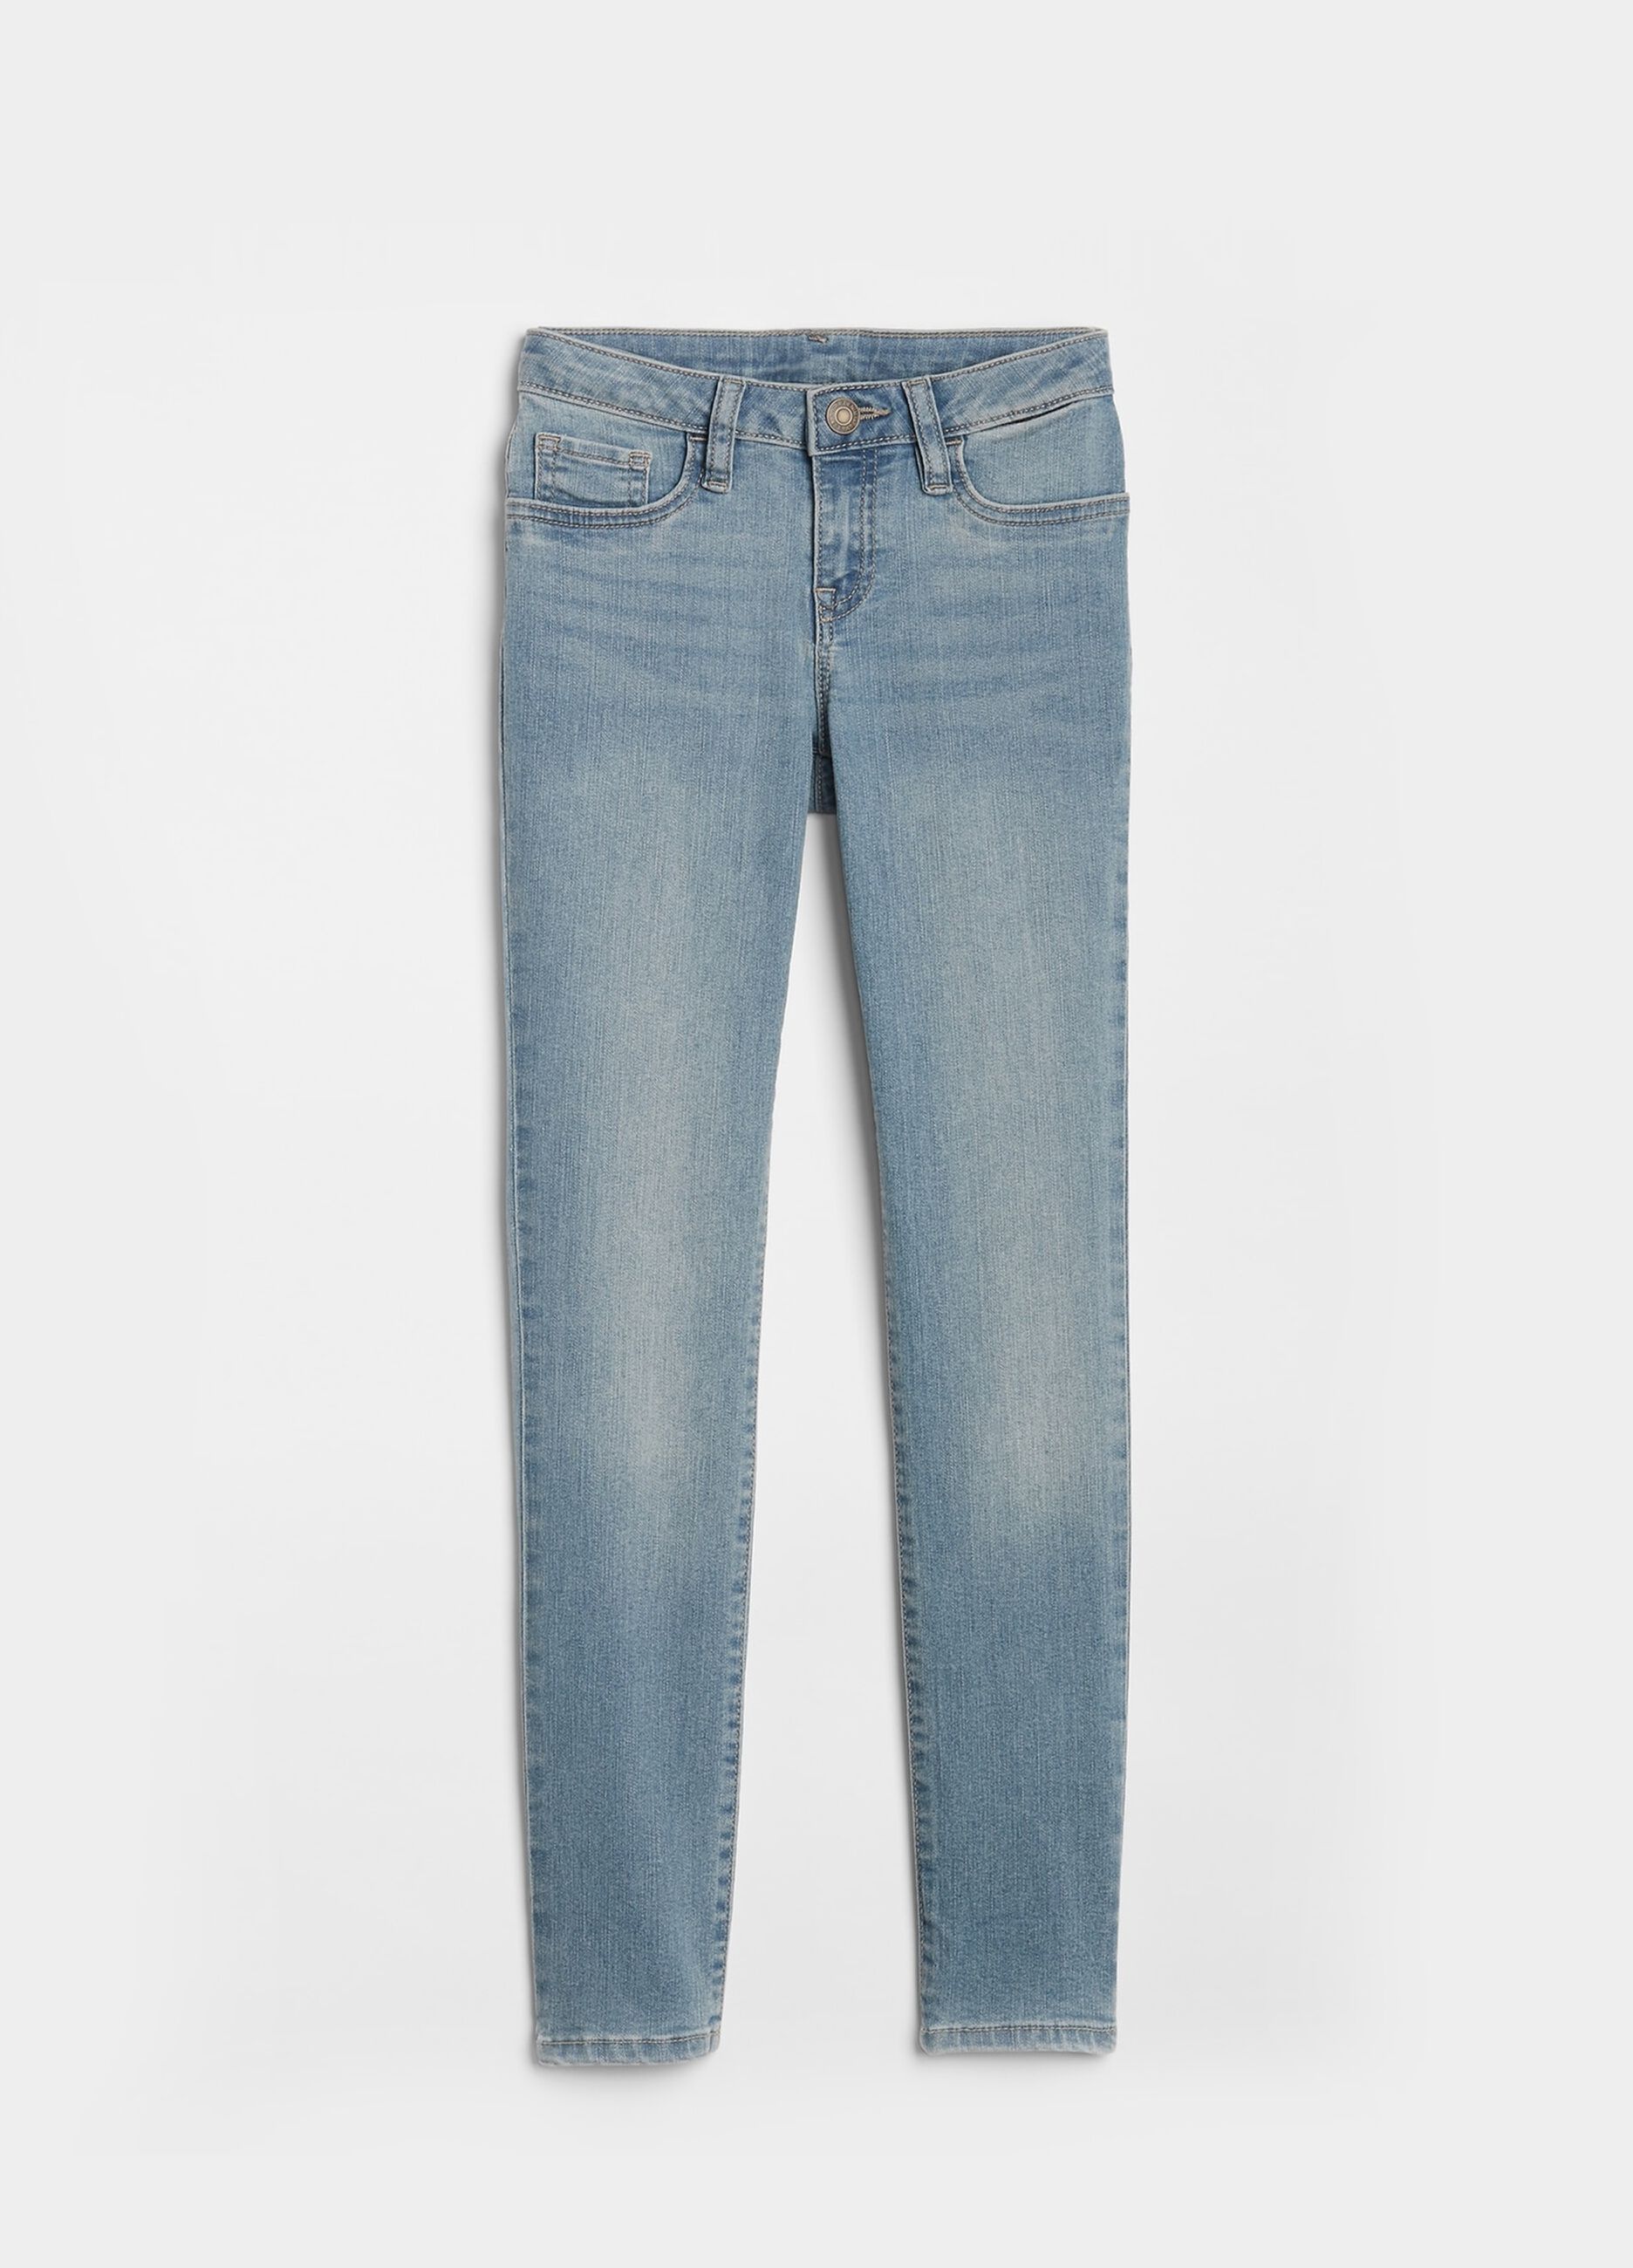 Super-skinny jeans